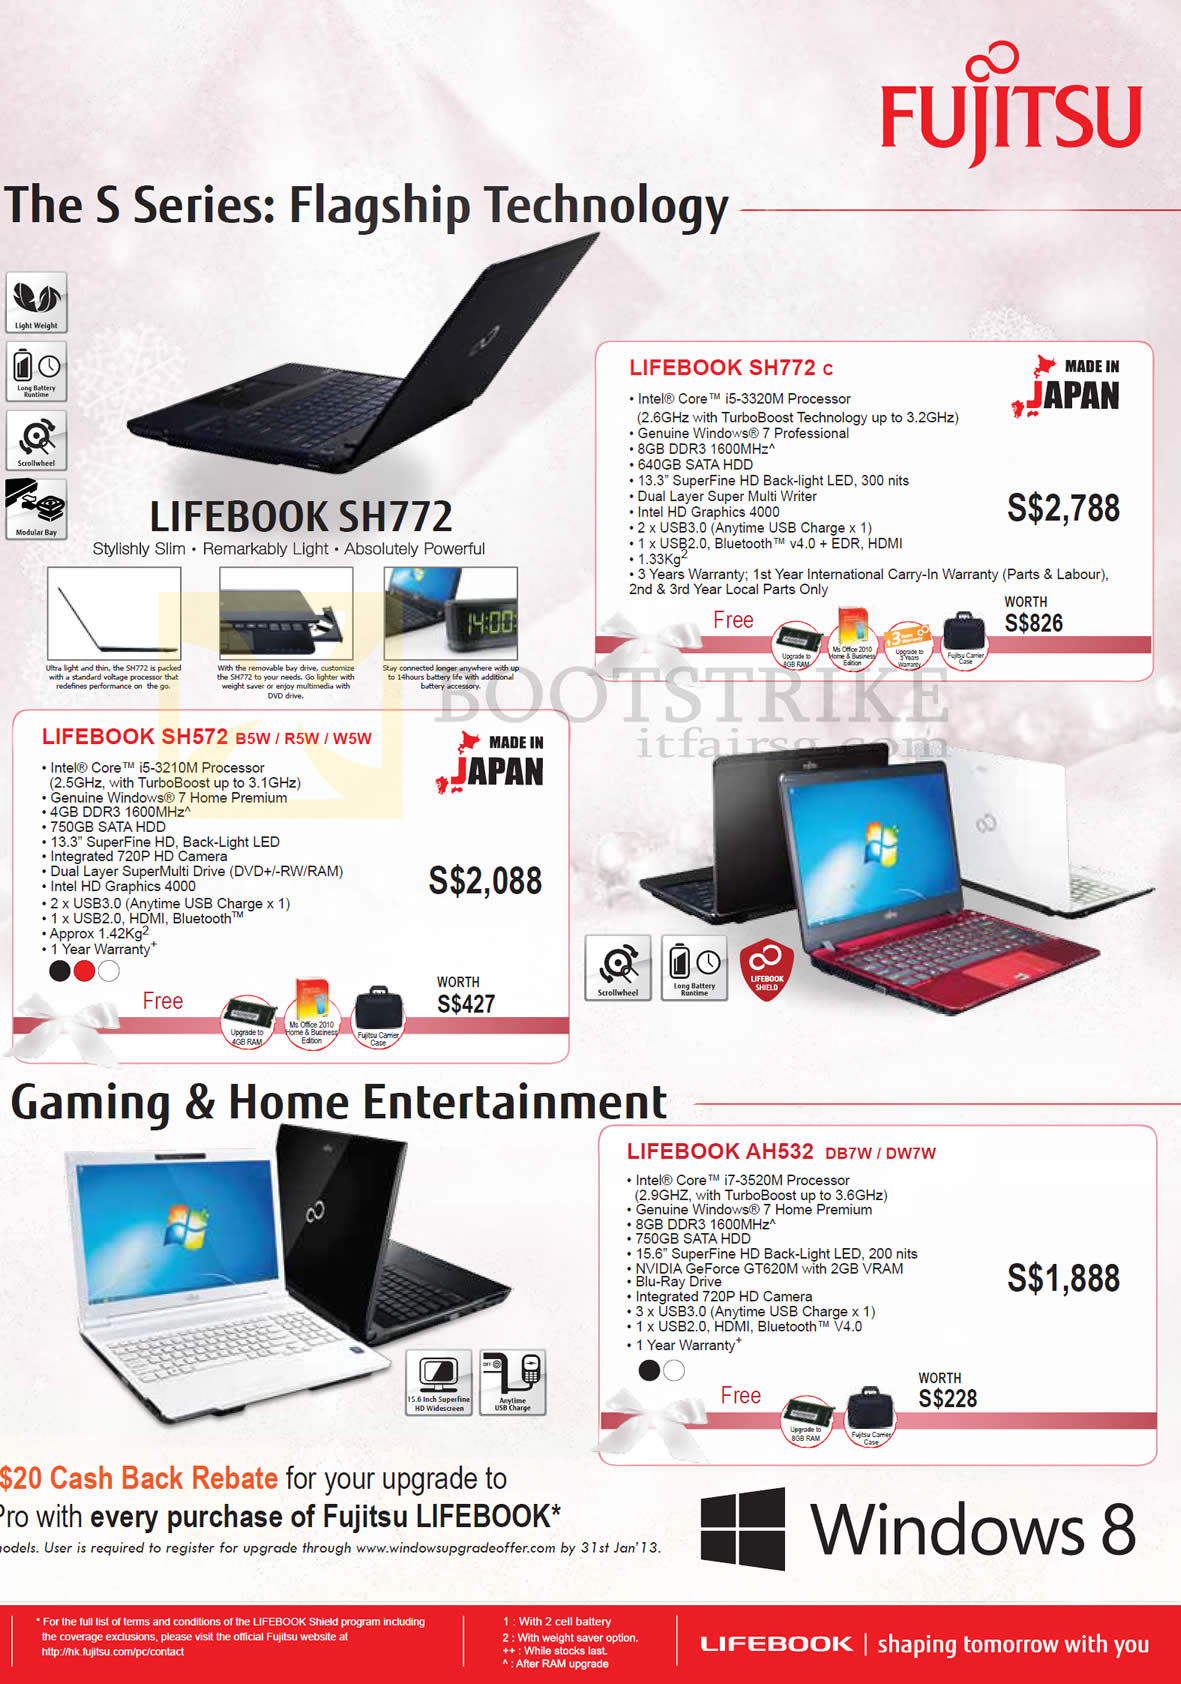 SITEX 2012 price list image brochure of Asiapac Fujitsu Notebooks Lifebook SH772 C, SH572 B5W R5W W5W, AH532 DB7W DW7W